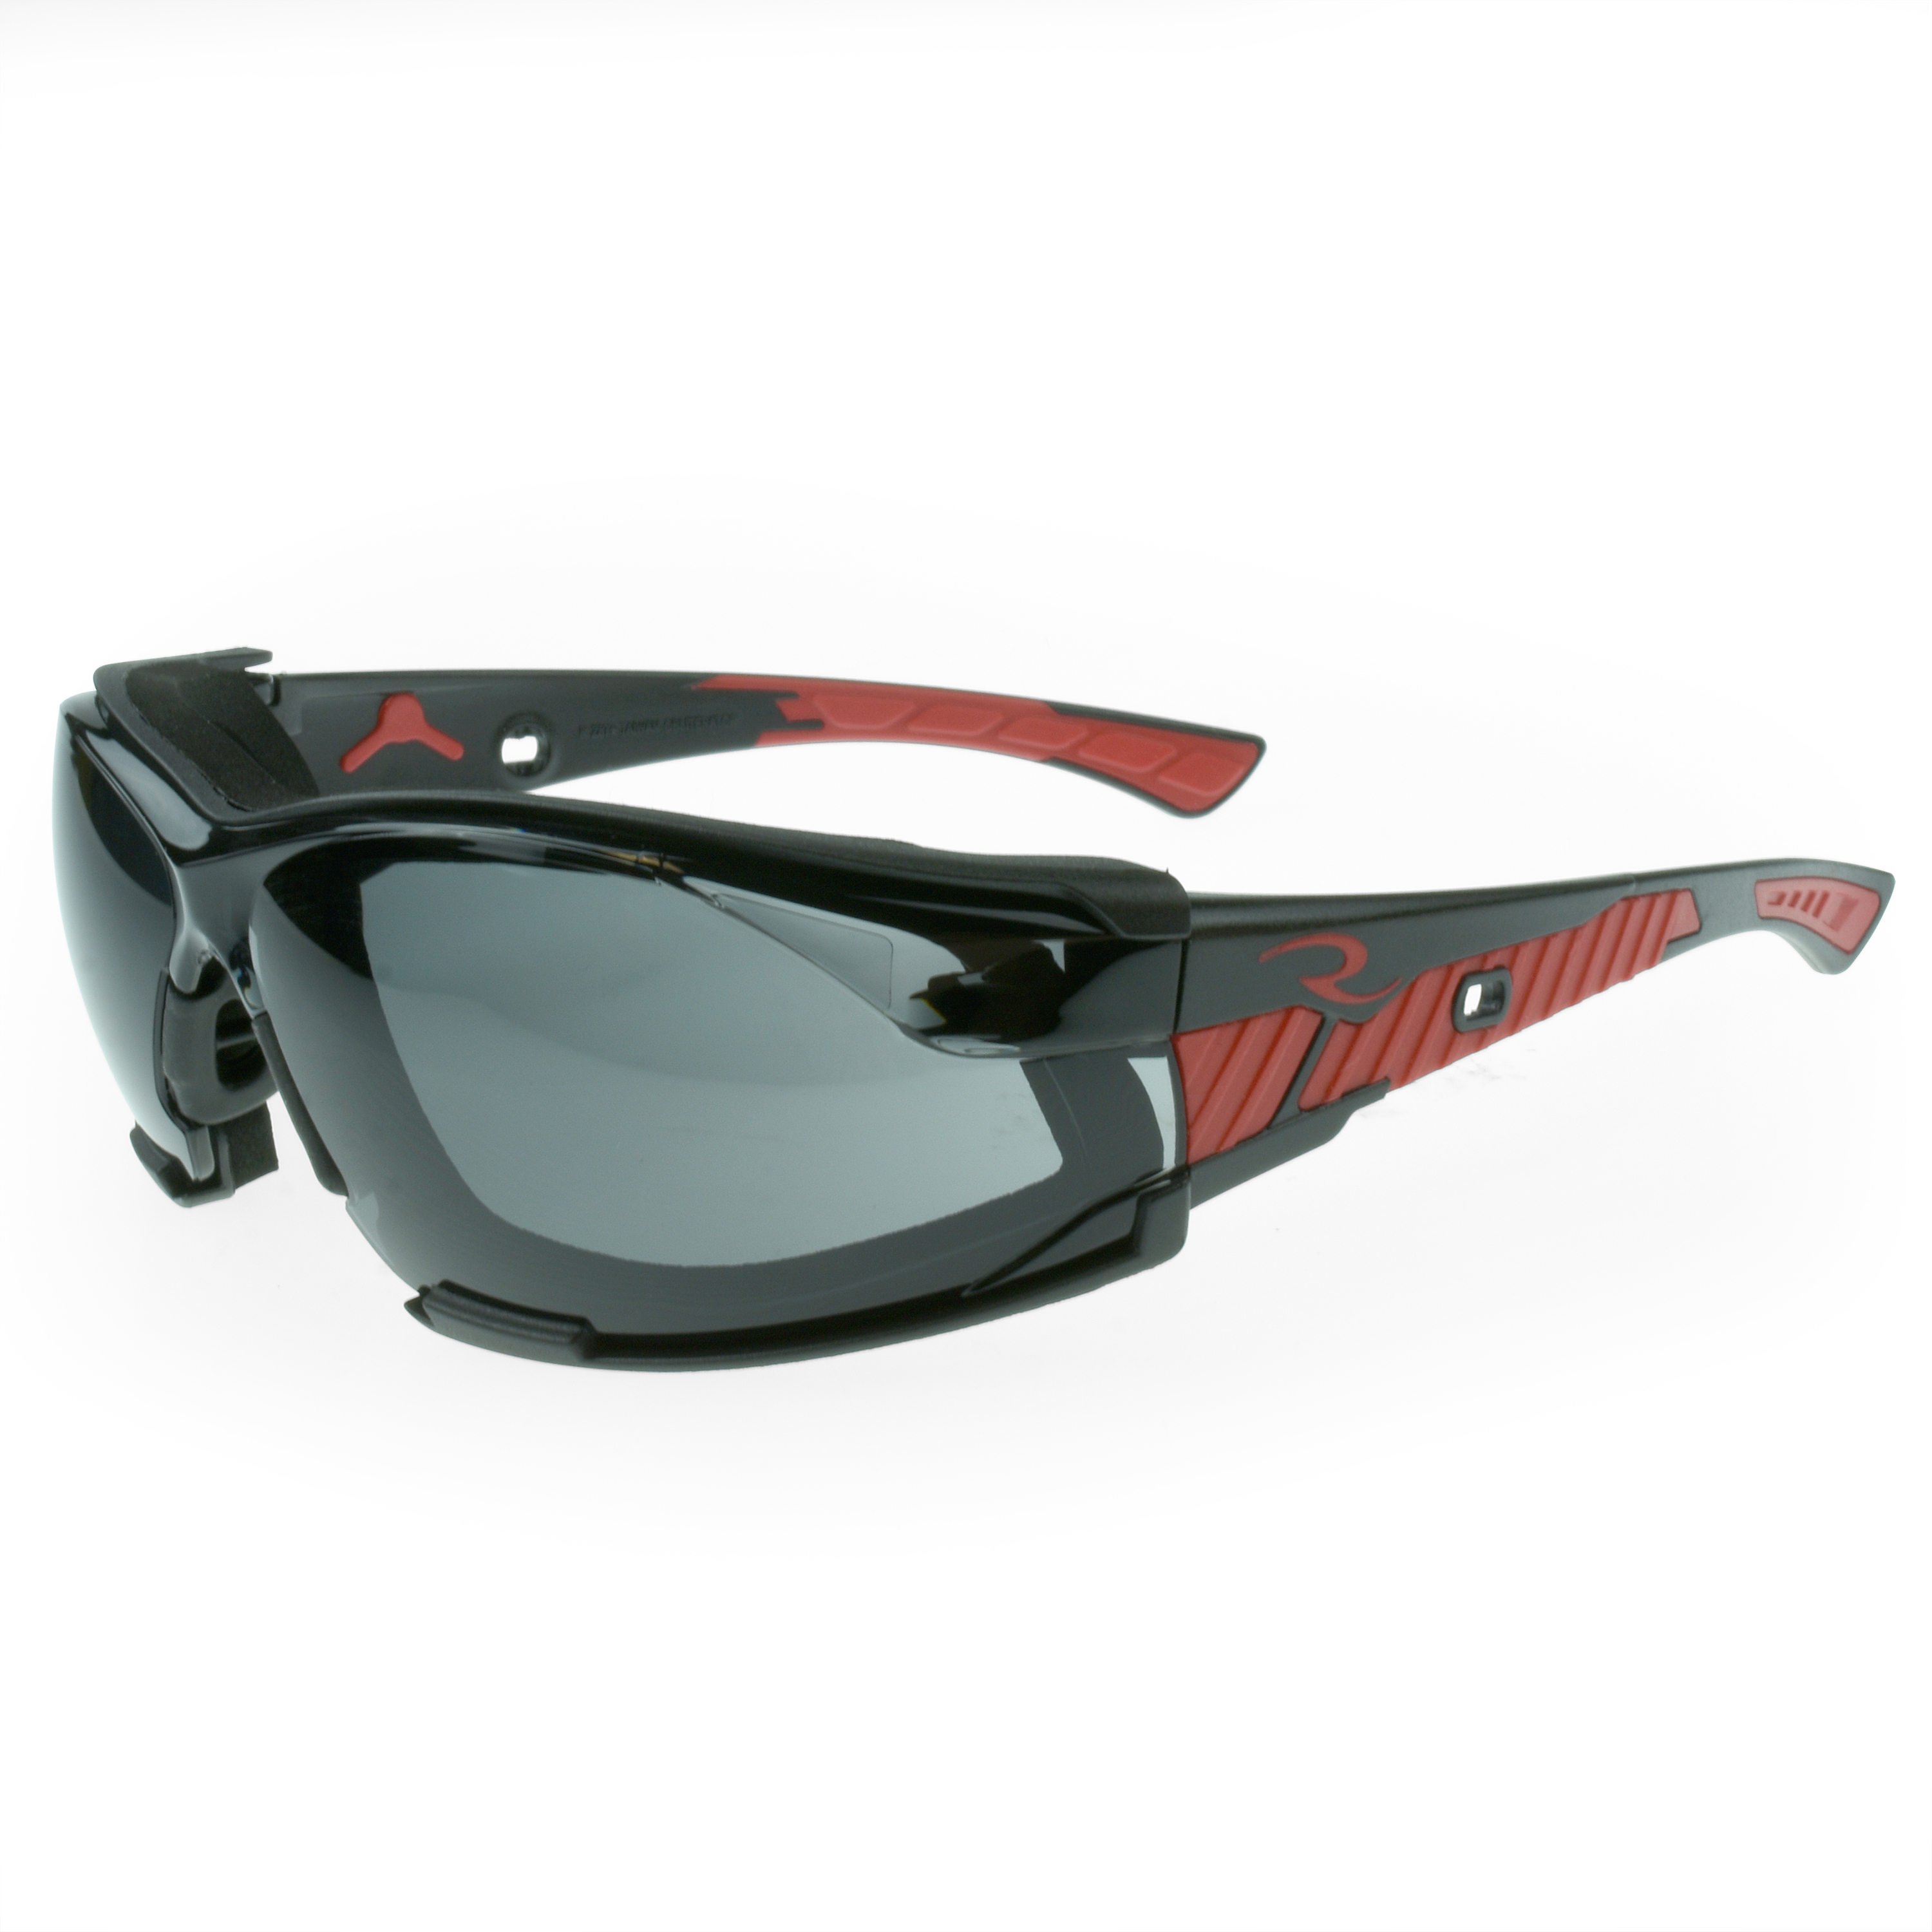 Obliterator™ IQ - IQuity™ Anti-Fog Foam Lined Safety Eyewear - Black / Red Frame - Smoke IQ Anti-Fog Lens - Anti-Fog Lens